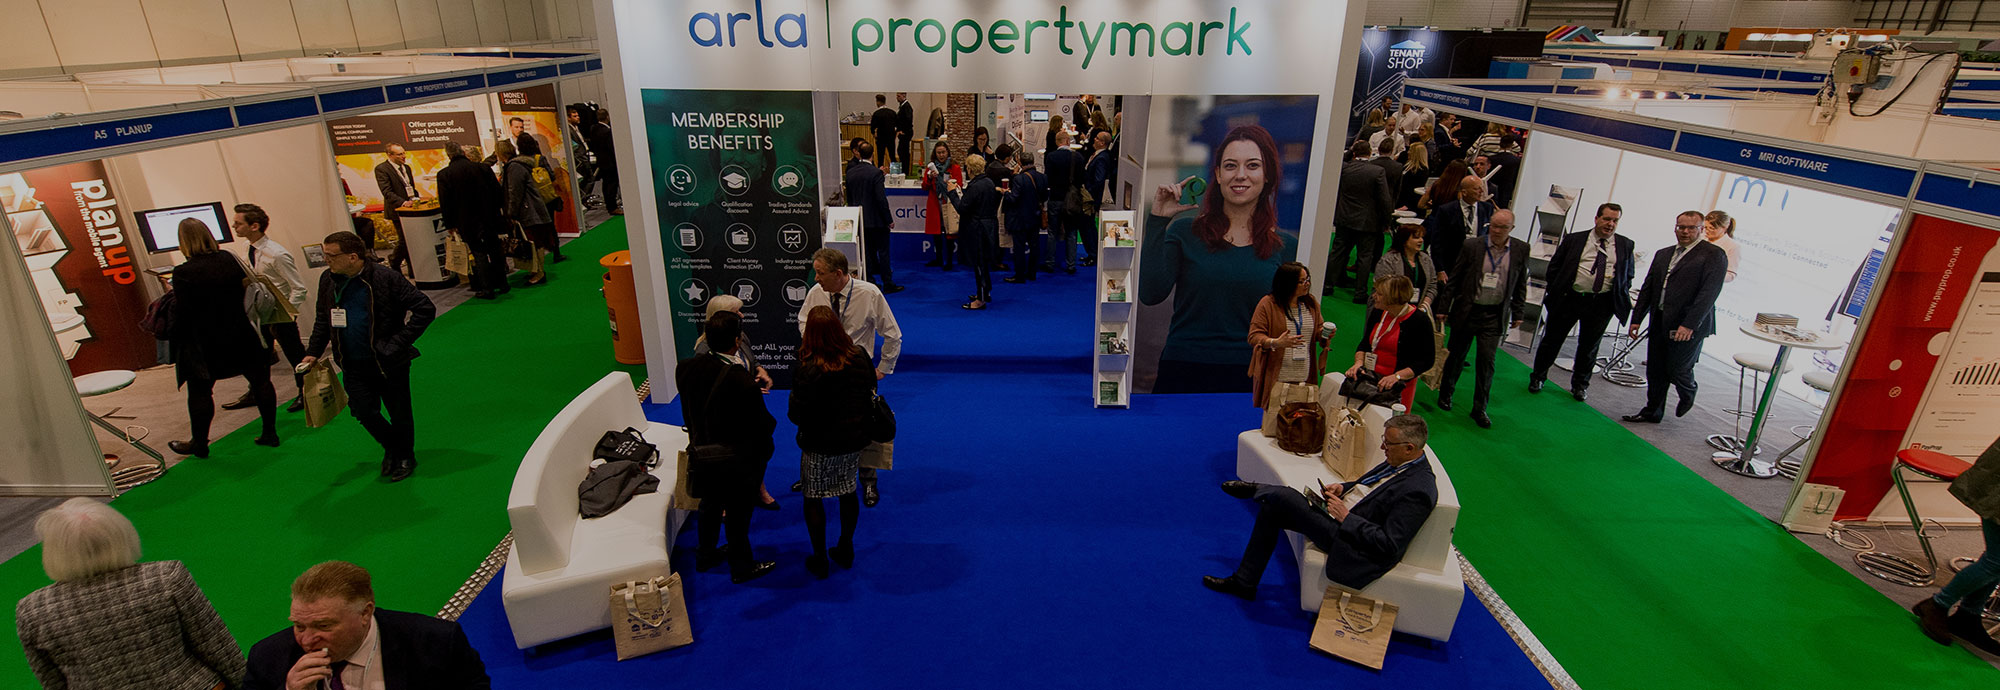 25th ARLA Propertymark Exhibition